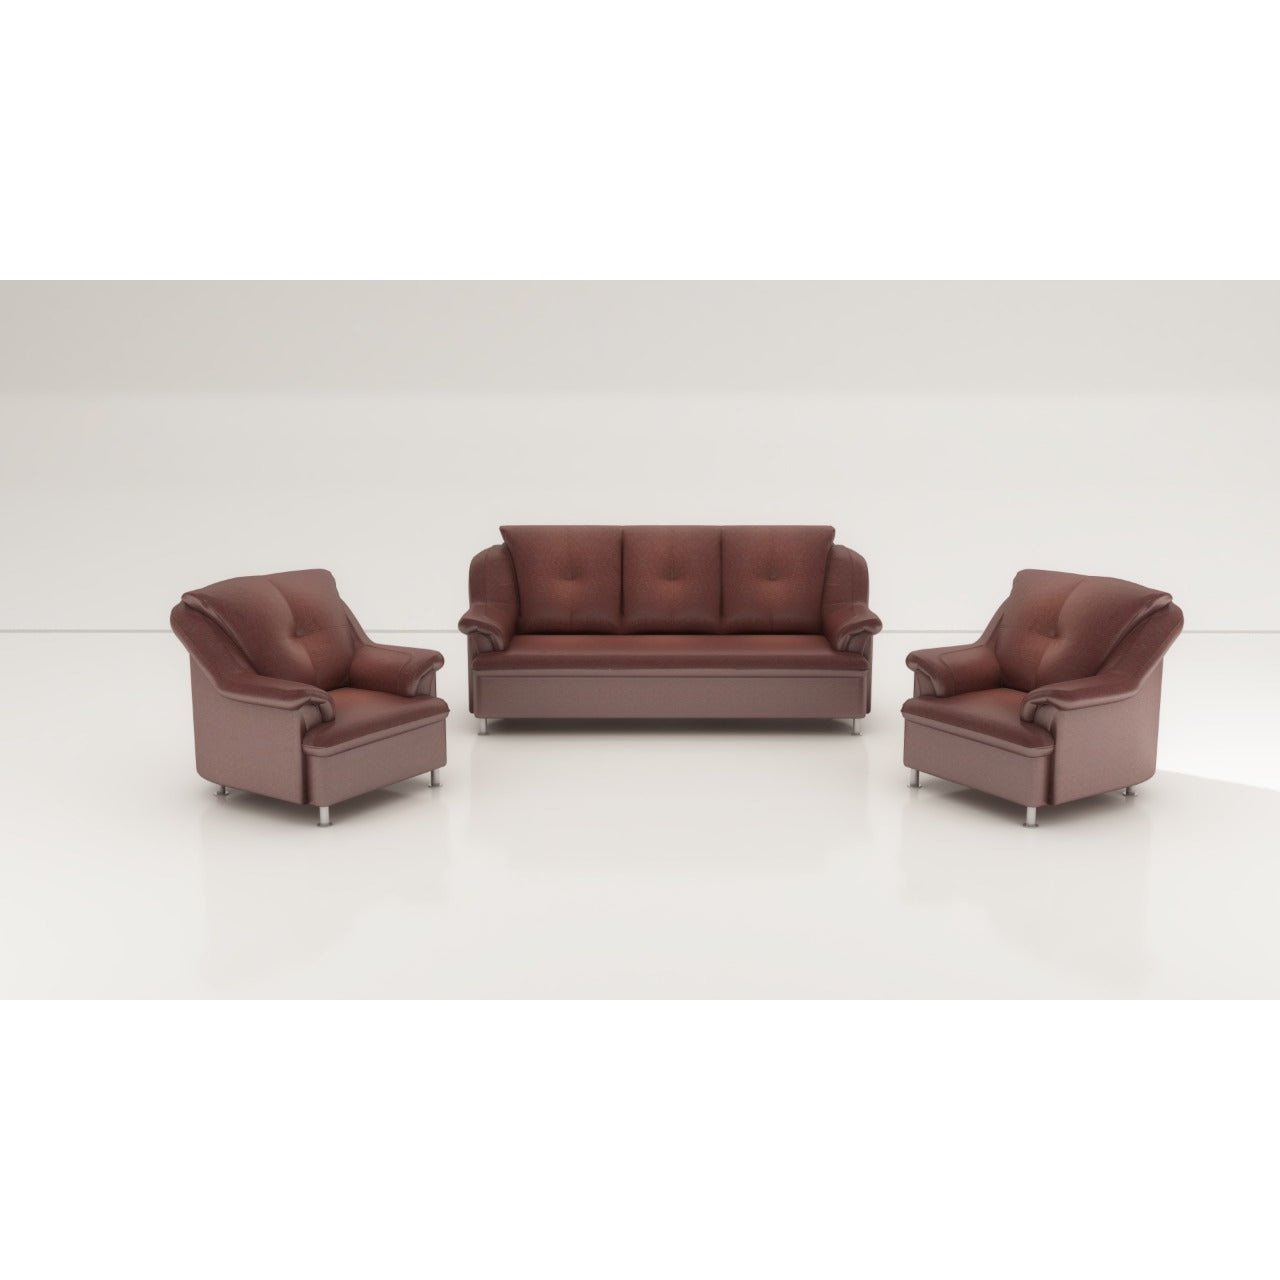 MS-500 SYDNEY SOFA SET 3+1+1 Mobel Furniture